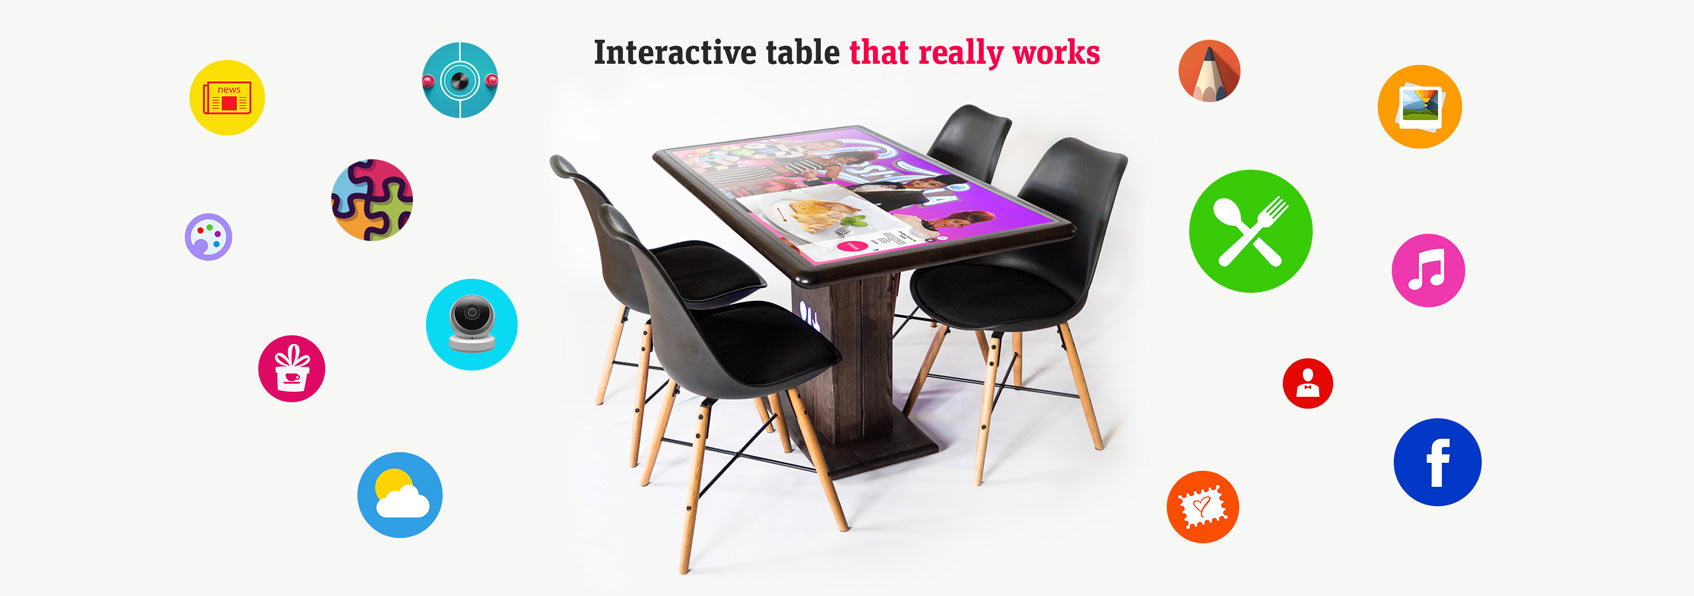 kodisoft interactive restaurant table